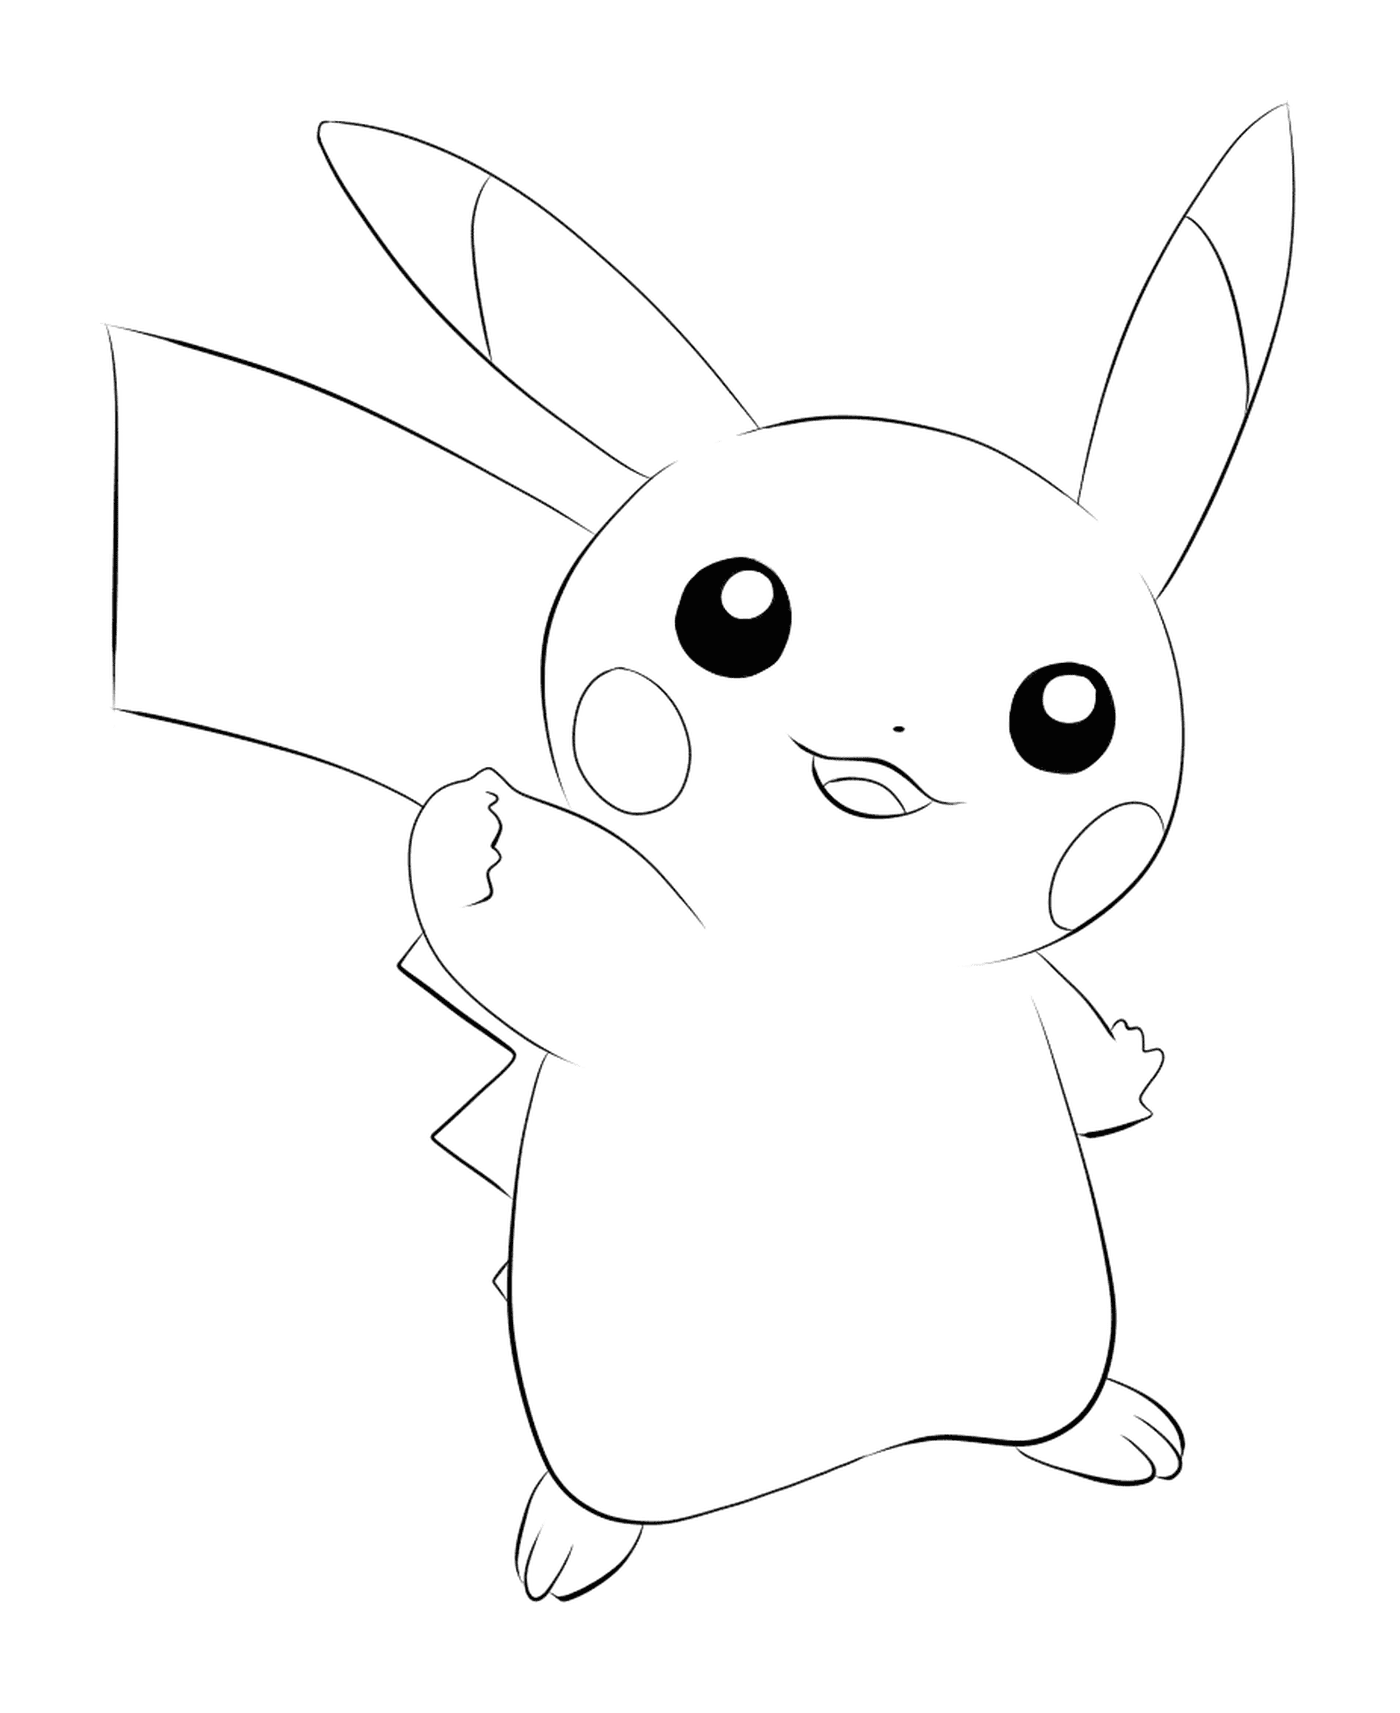  Pikachu, el icónico Pokémon 